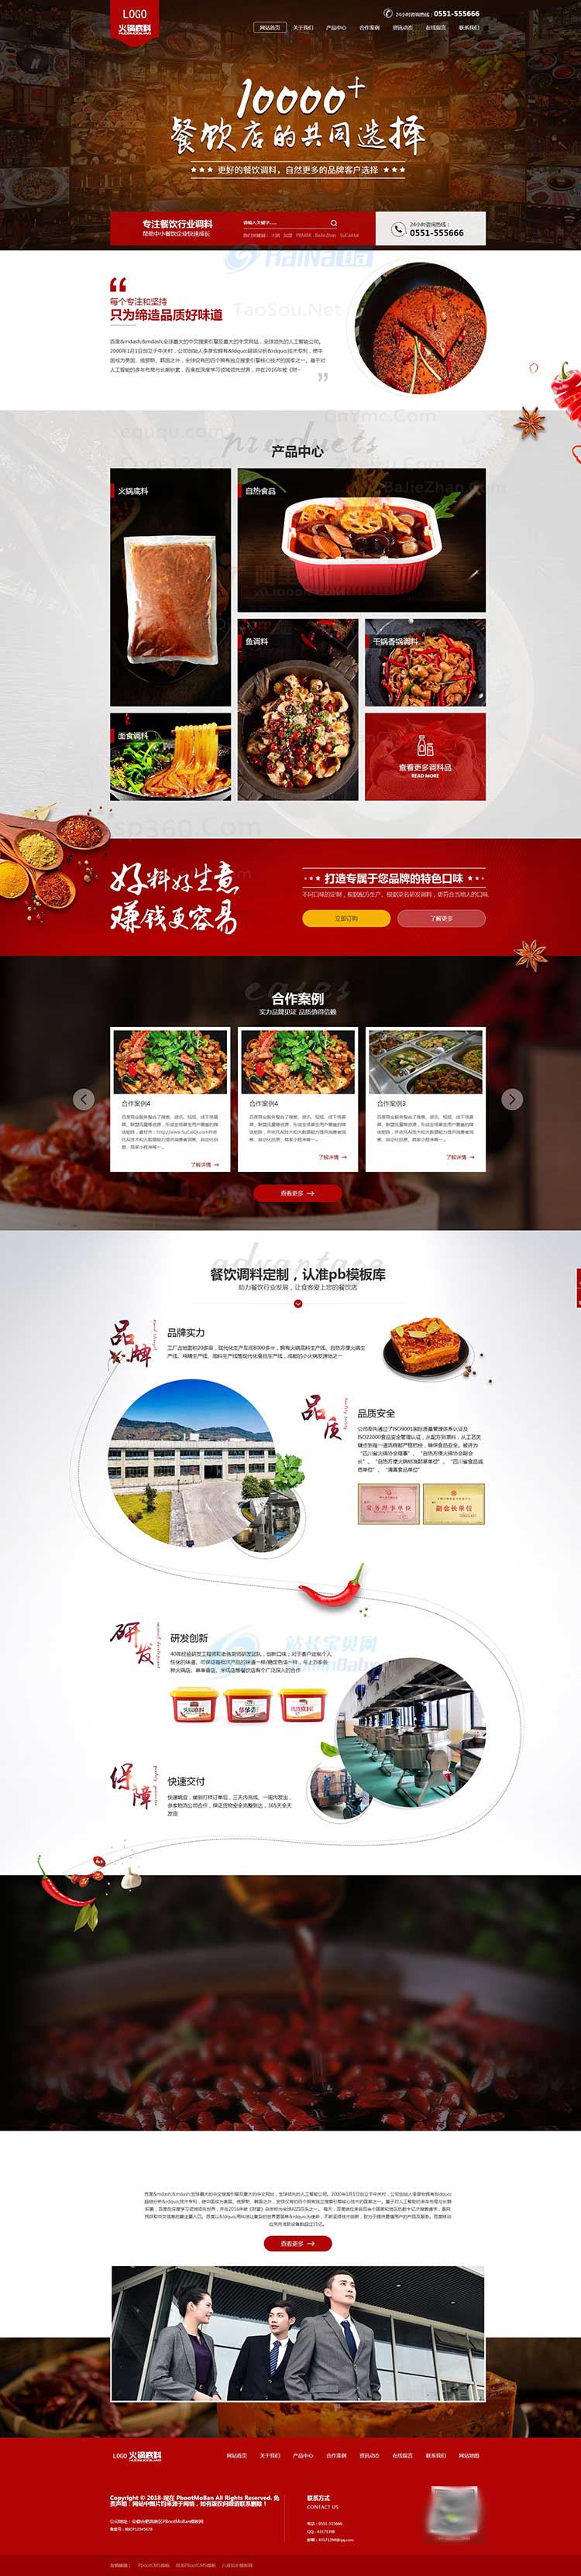 pb企业源码下载PBOOTCMS高端火锅底料餐饮调料食品营销型网站模板(带手机端)